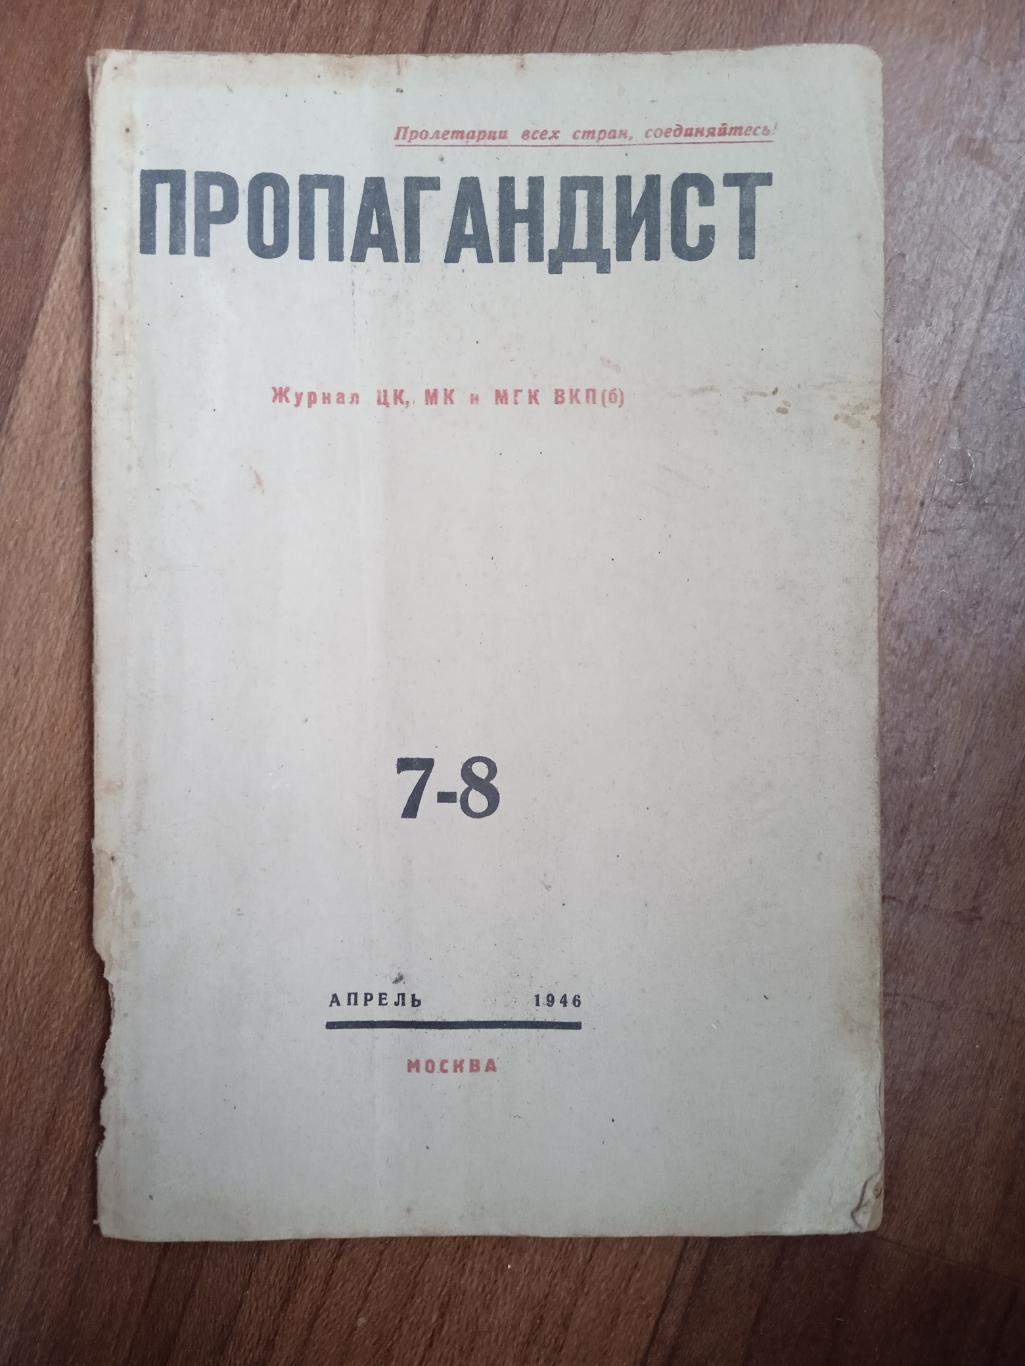 Пропагандист,1946(N- 7-8)